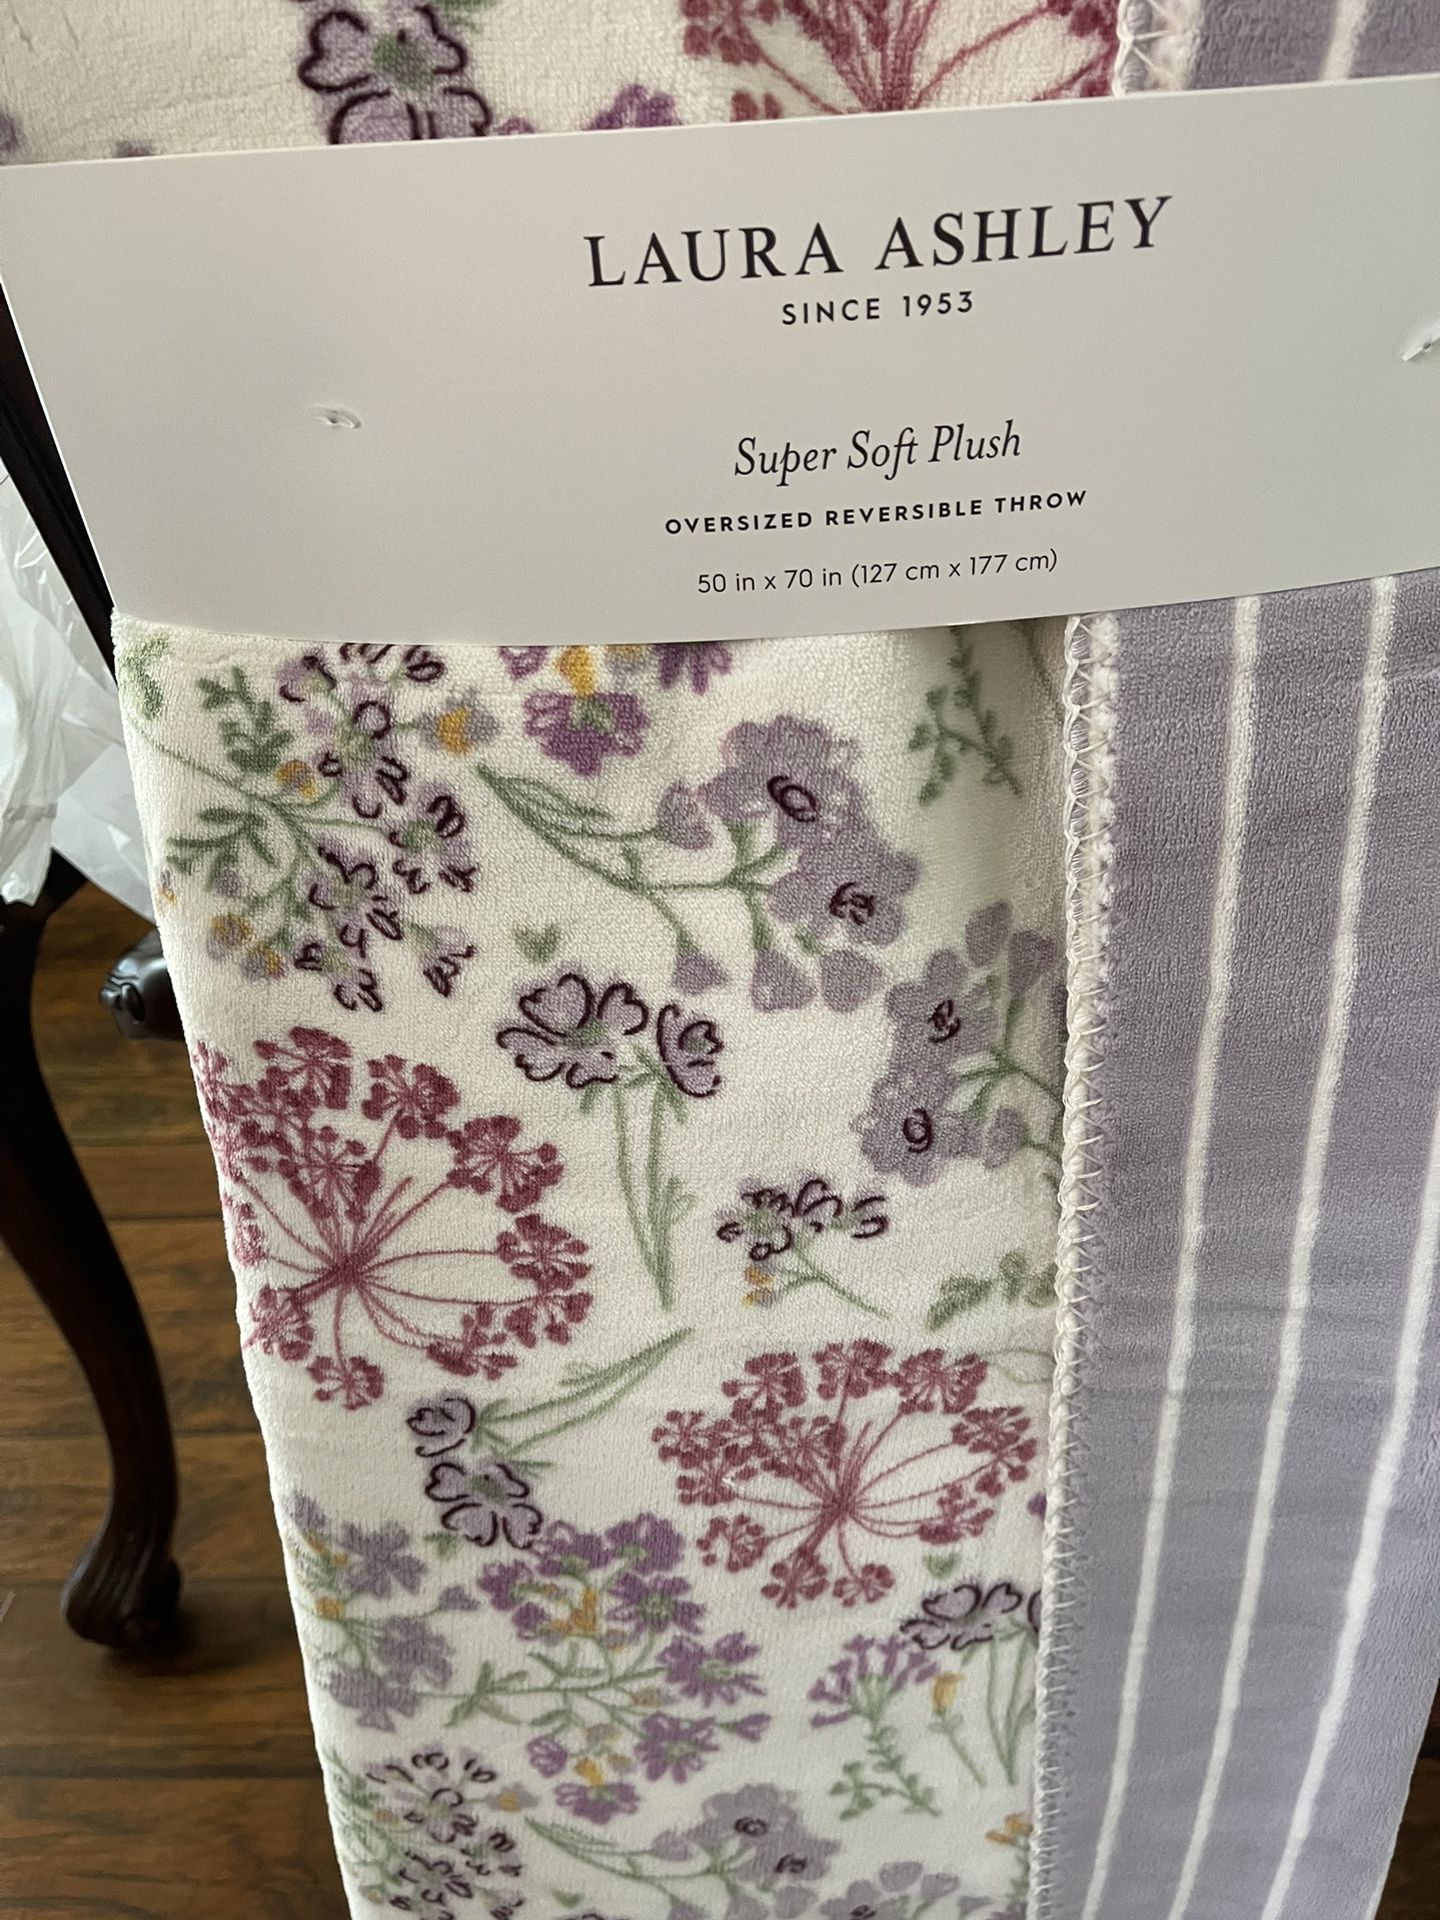 Laura Ashley Plush Blanket 